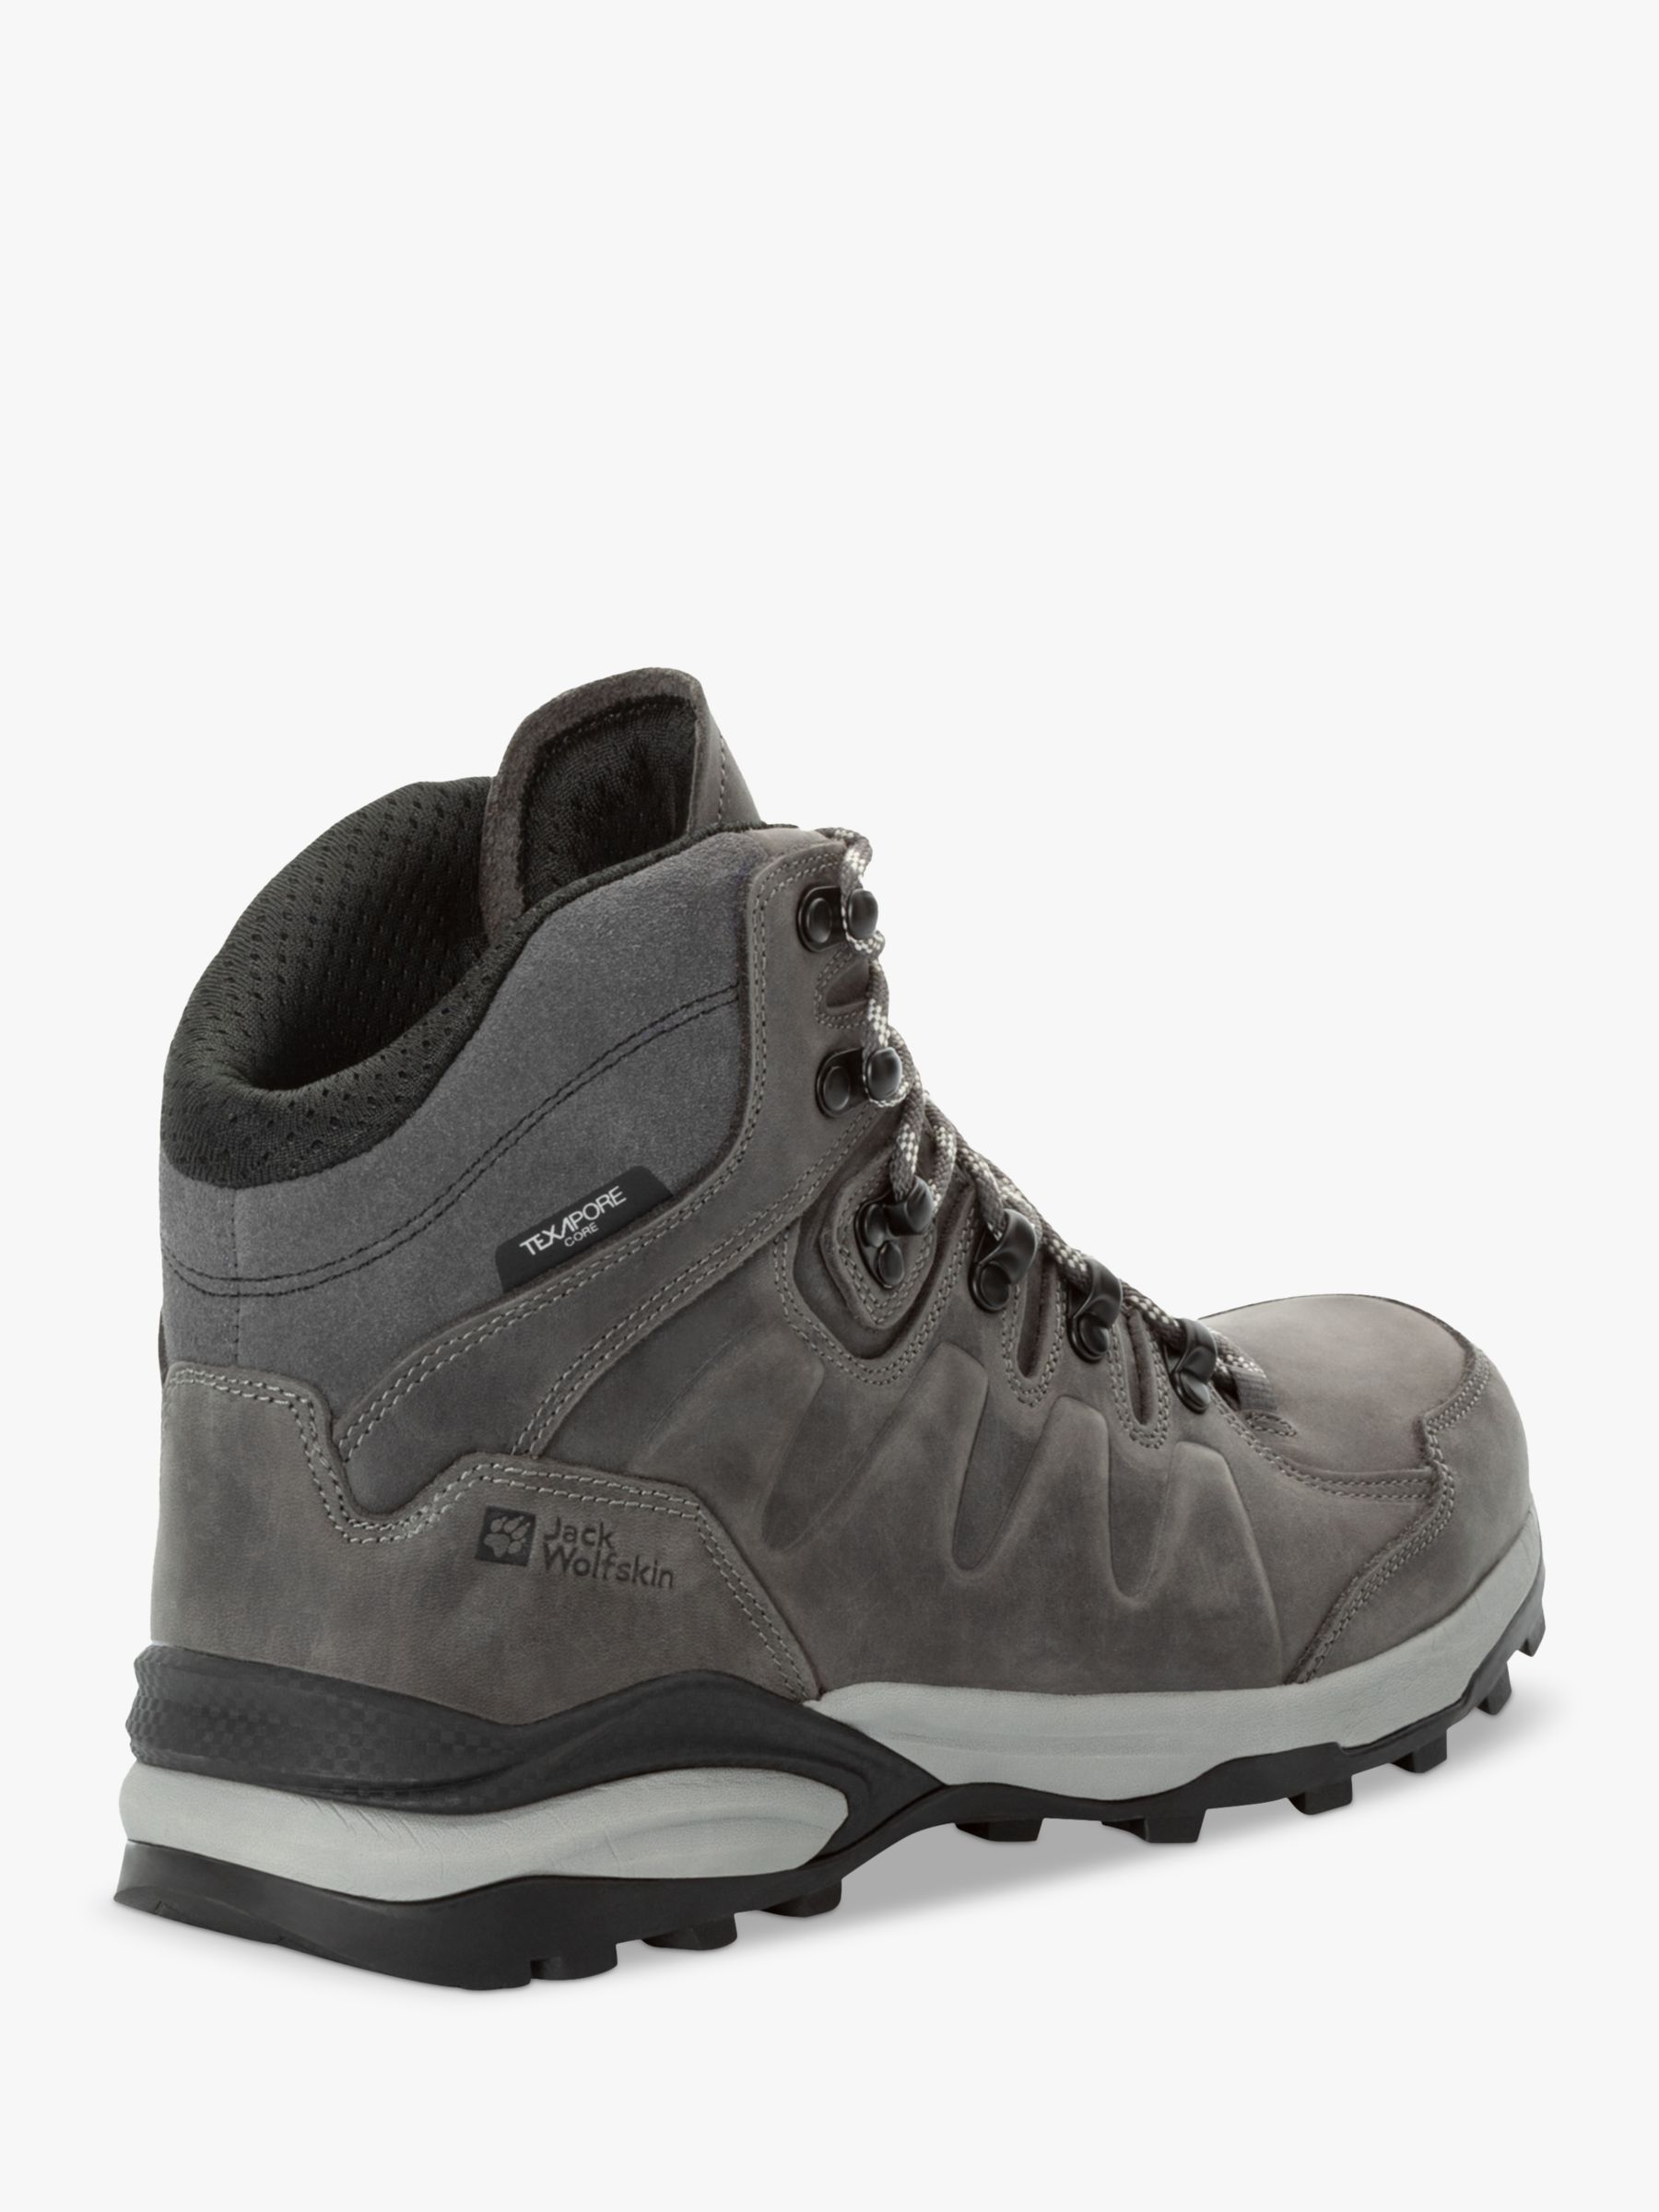 Jack Wolfskin Refugio Prime Texapore Mid Men's Walking Shoes, Slate Grey, 11